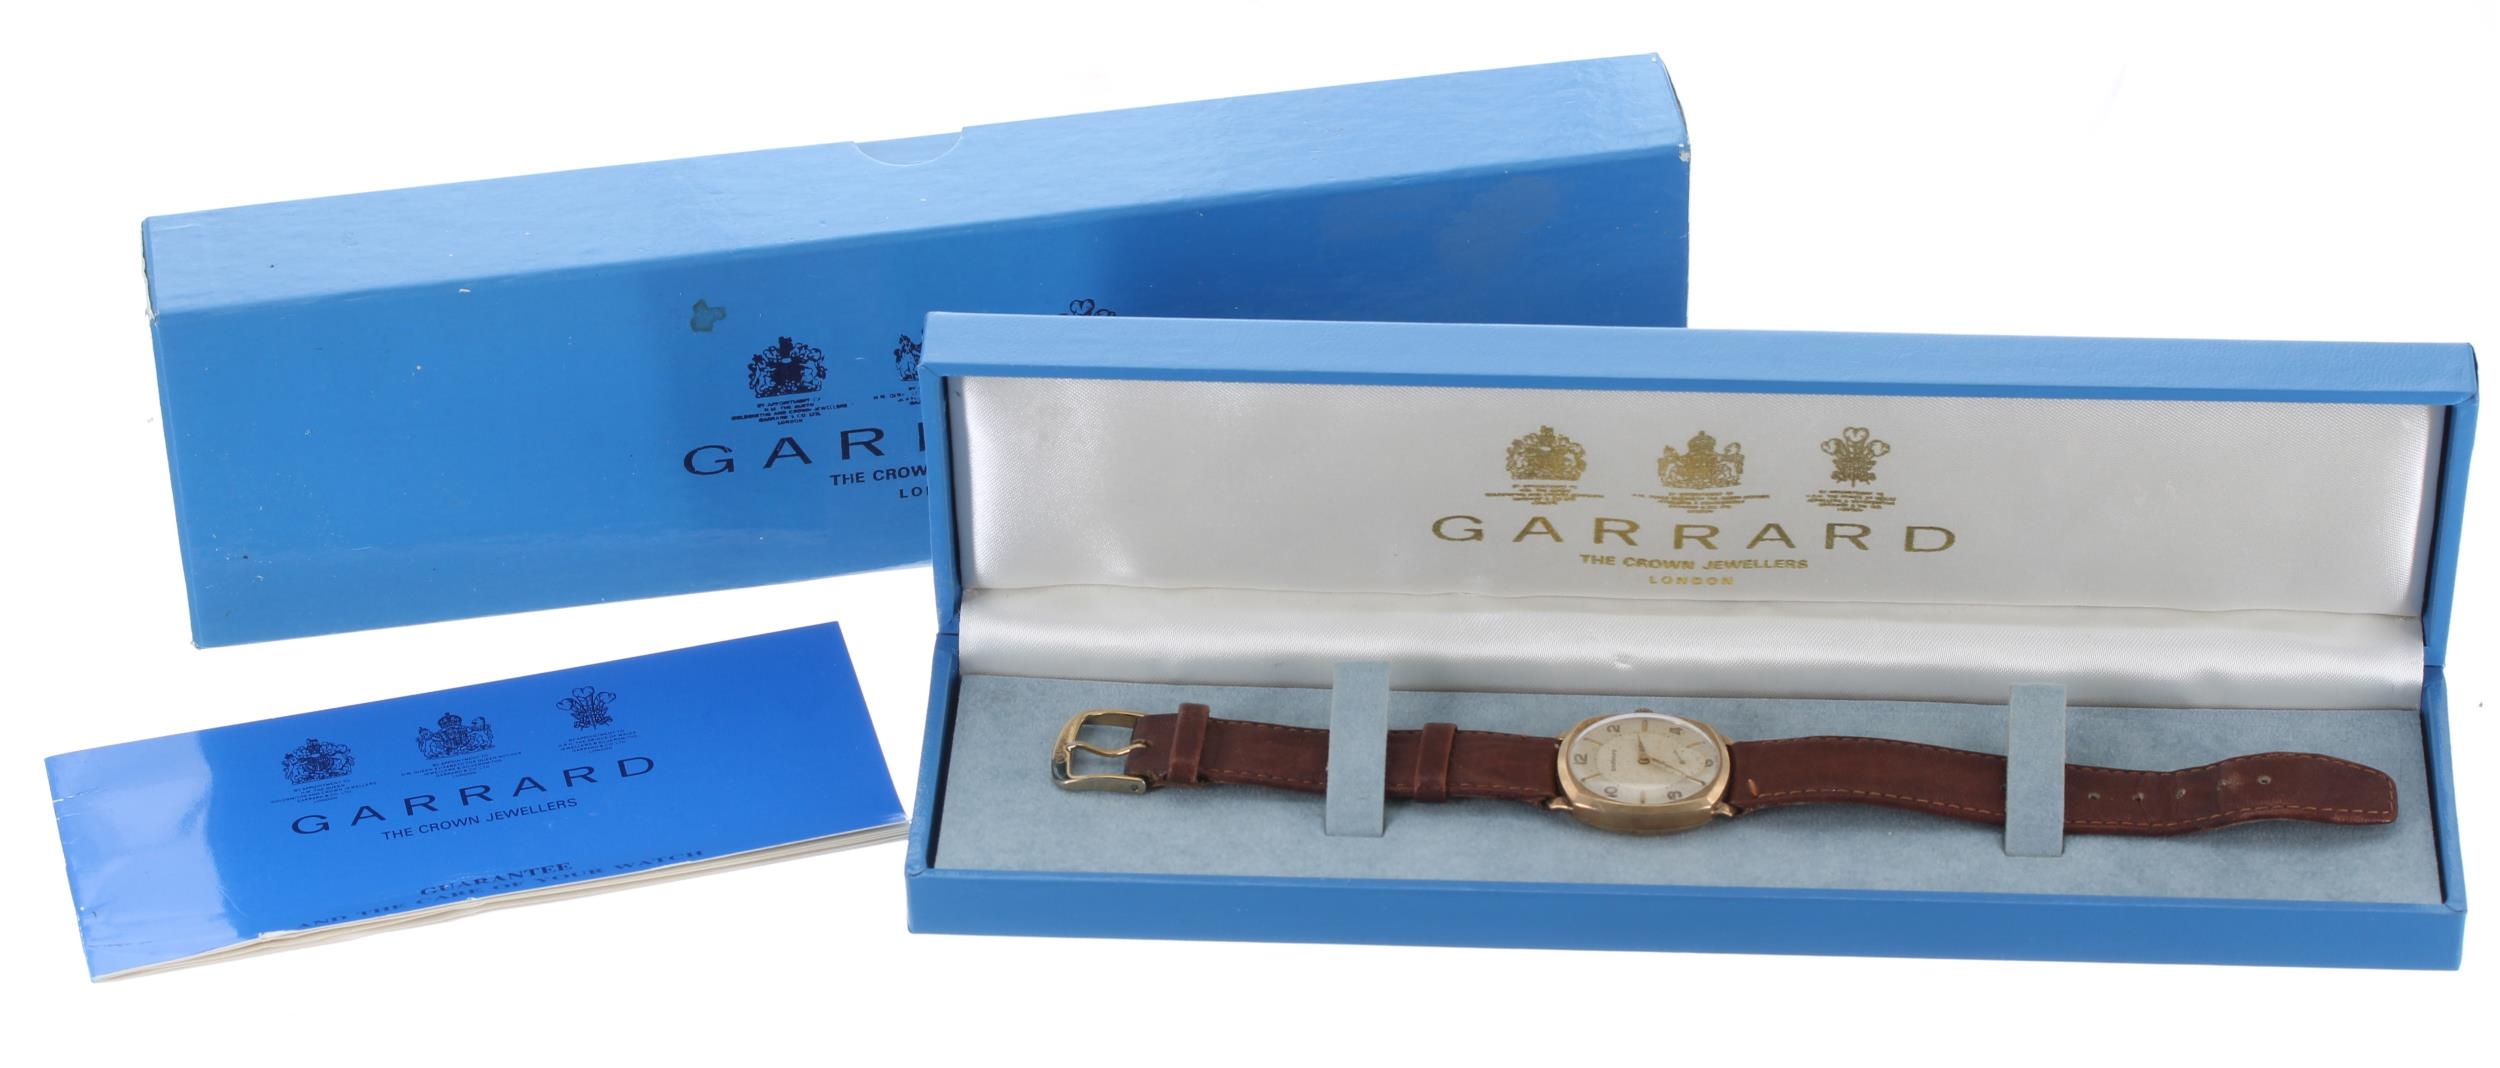 Garrard 9ct cushion case gentleman's wristwatch, Birmingham 1957, the signed circular silvered